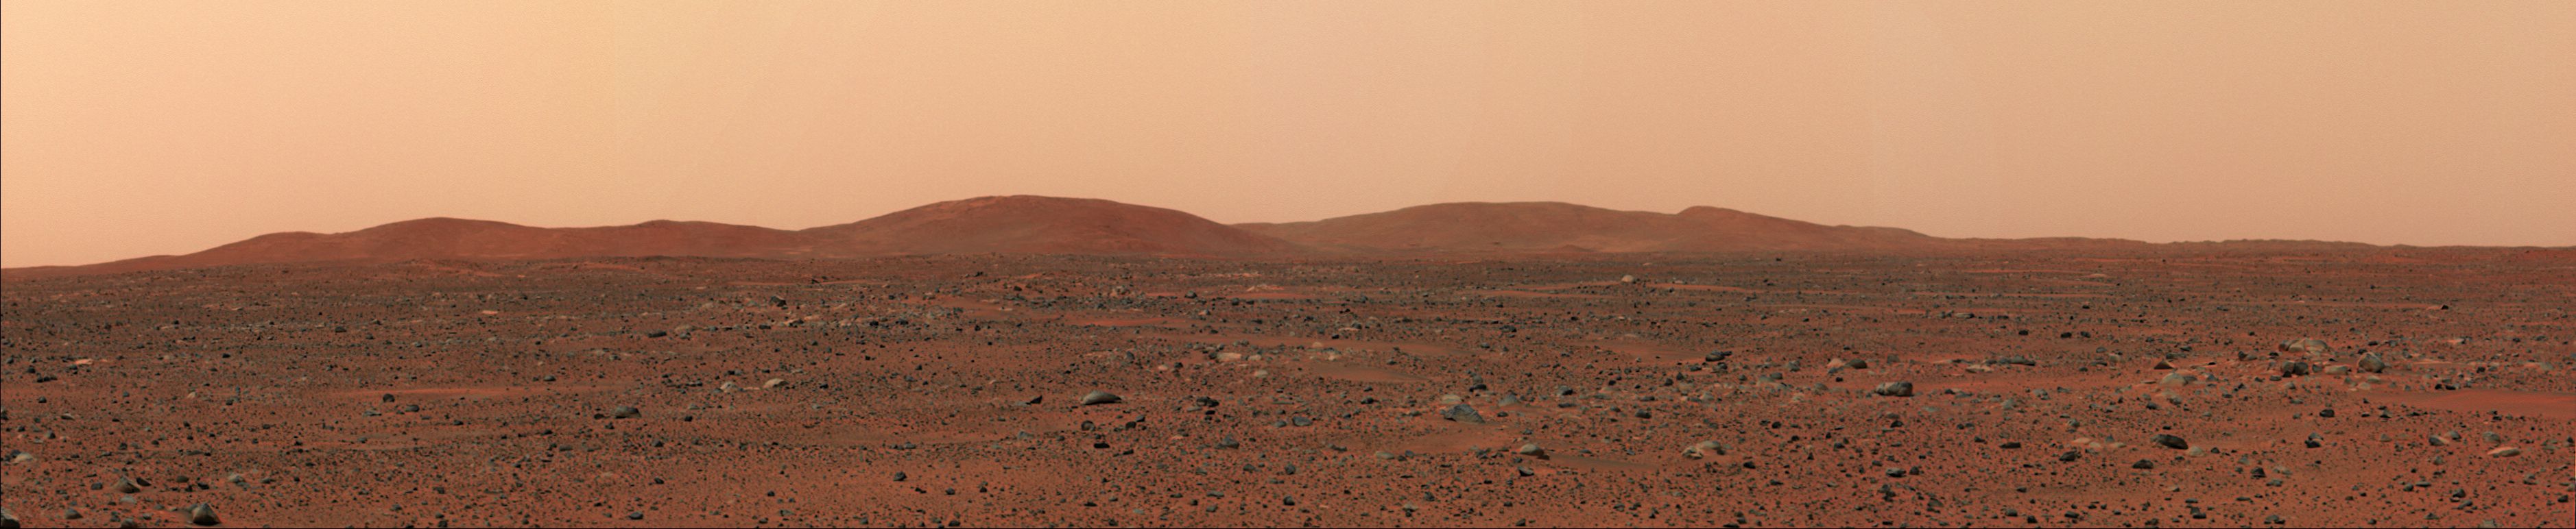 Mars Rover Spirit Image